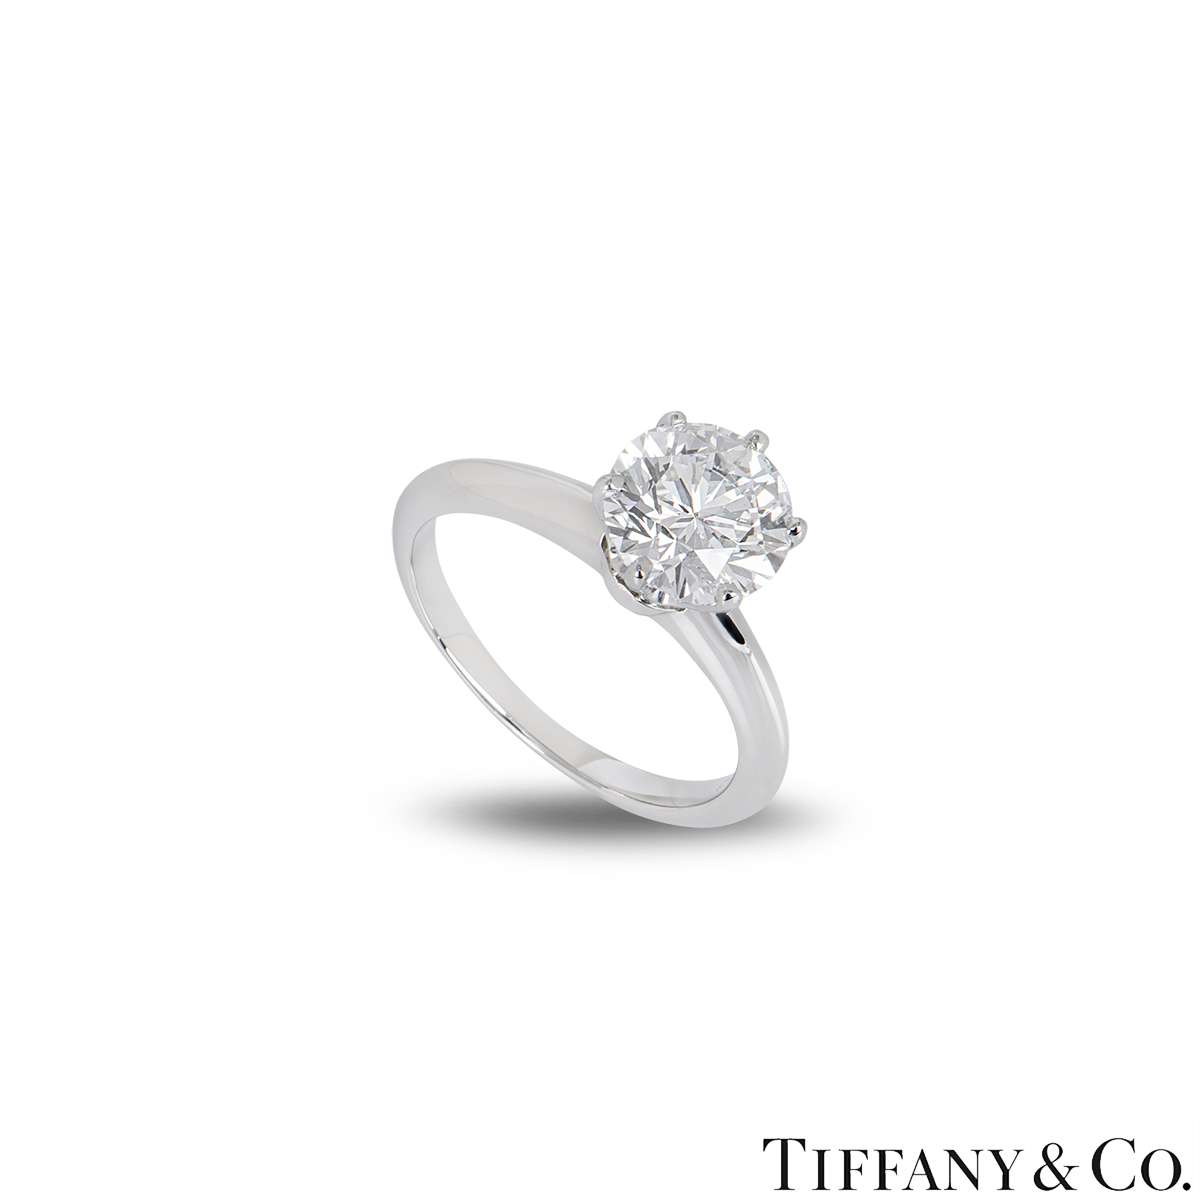 Tiffany & Co. Platinum Diamond Setting Ring 1.52ct D/VS2